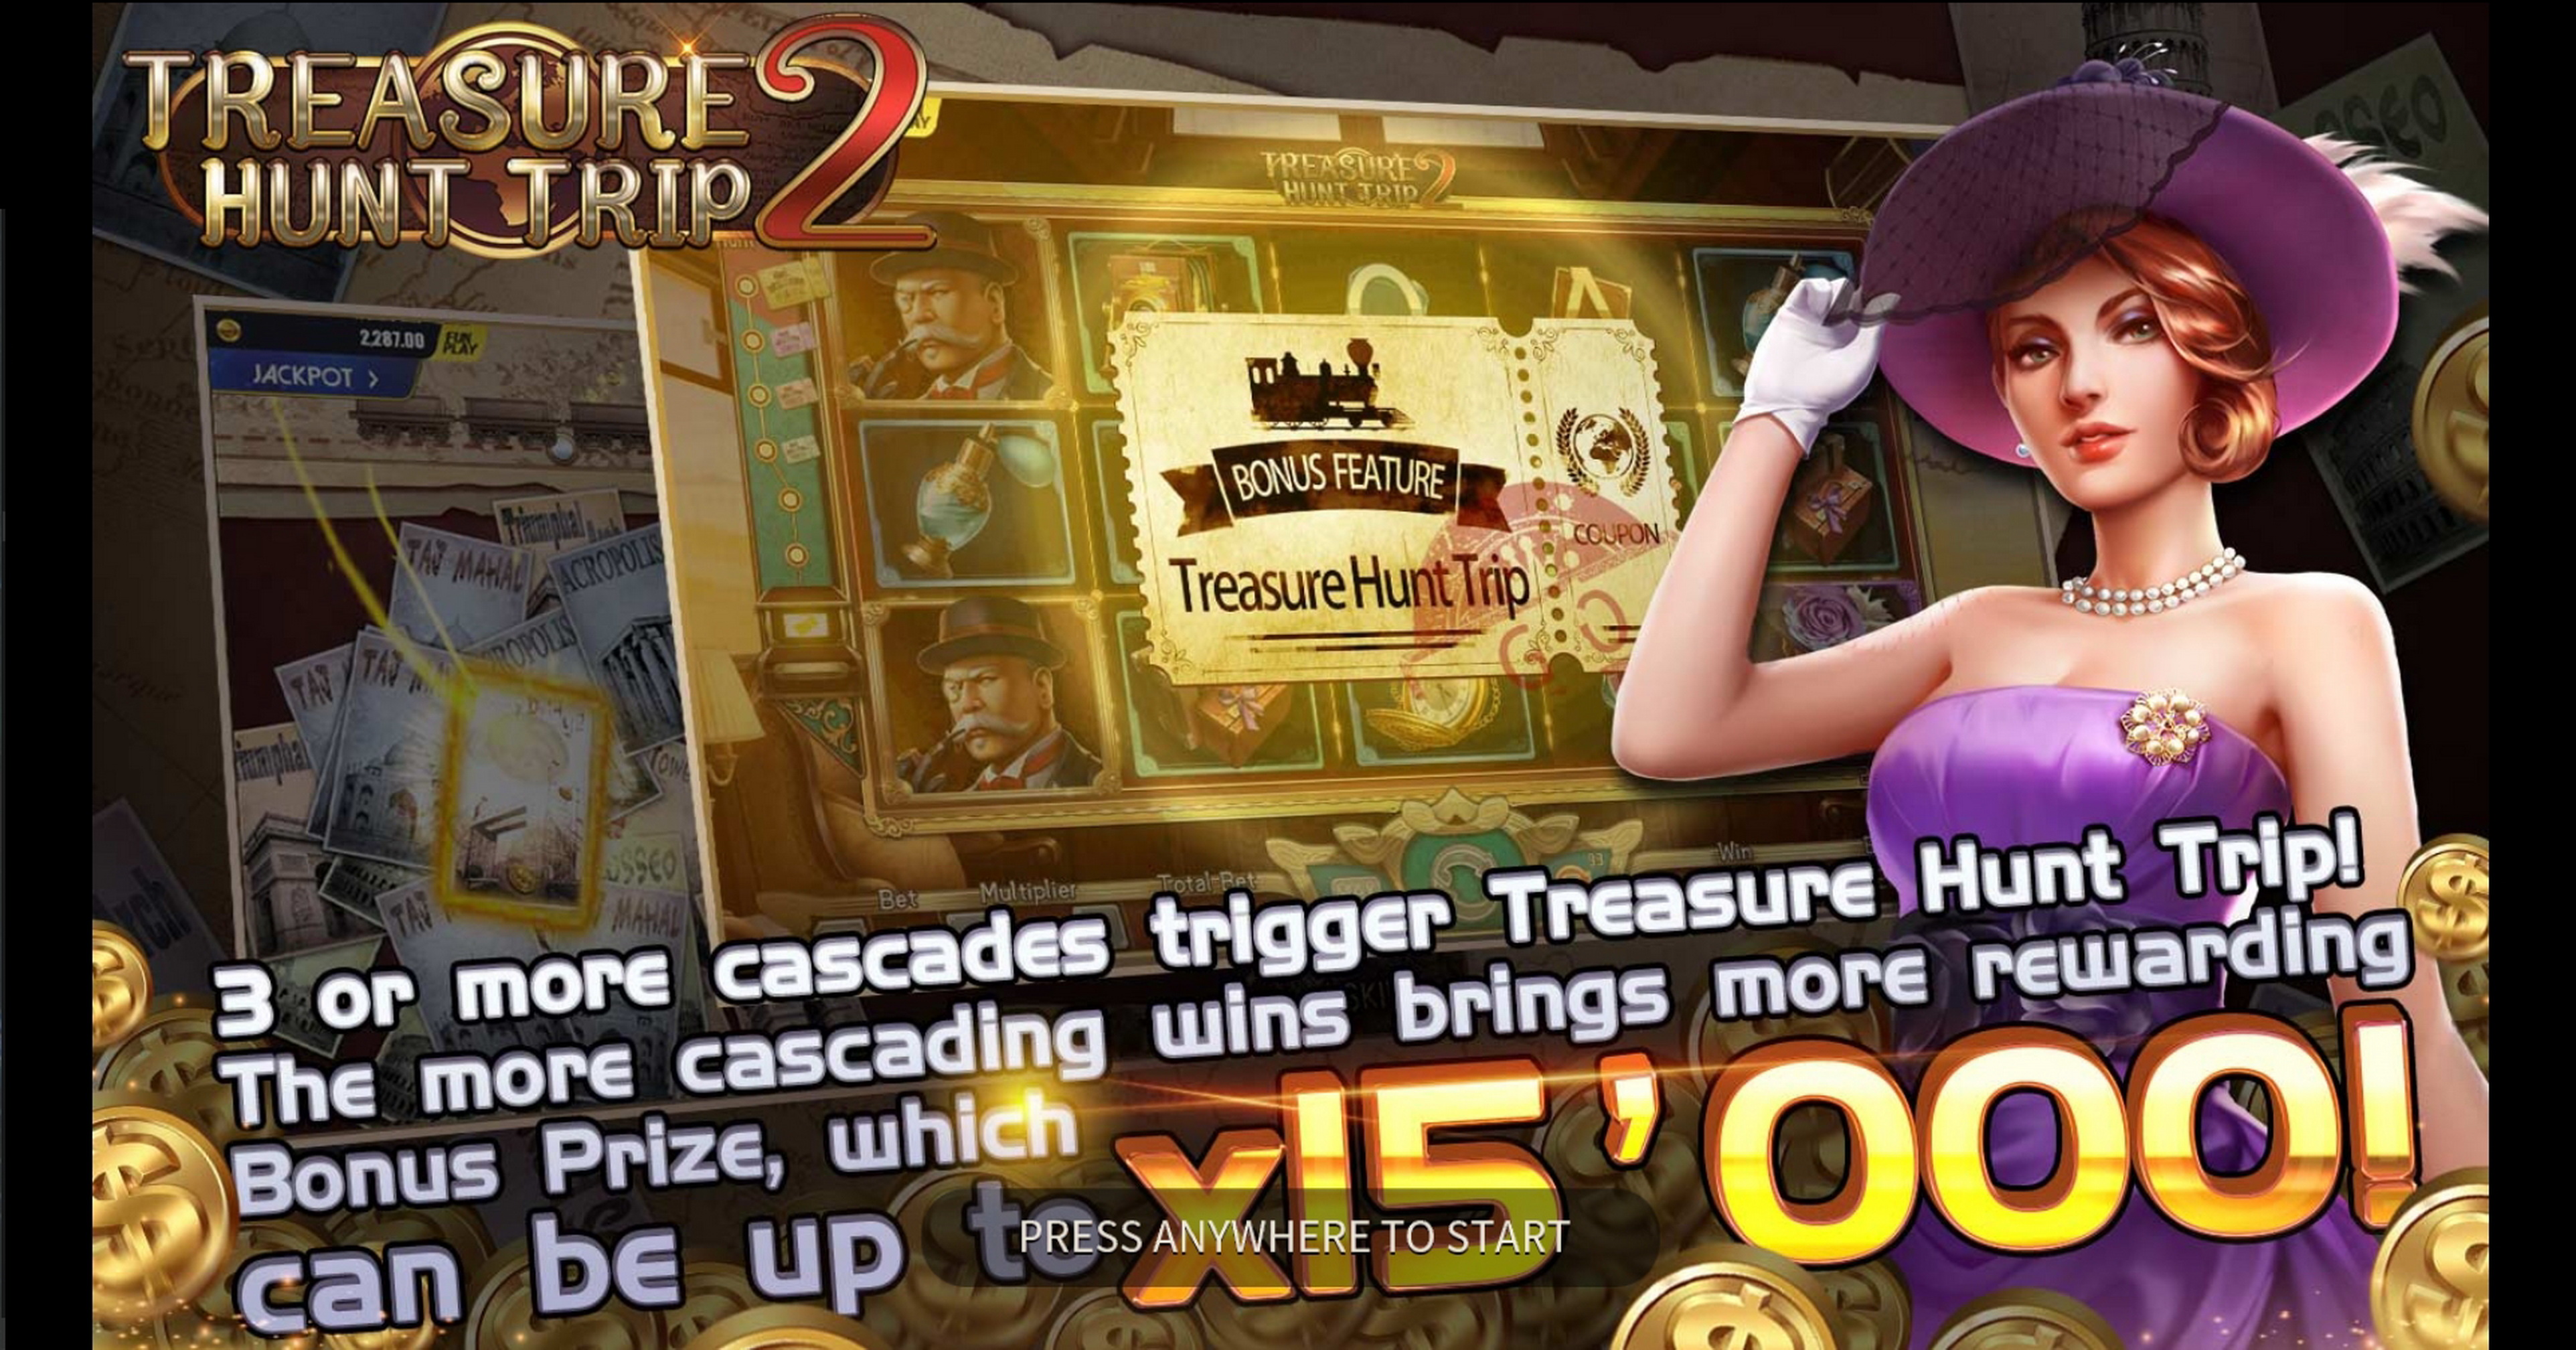 Play Treasure Hunt Trip 2 Free Casino Slot Game by Dreamtech Gaming